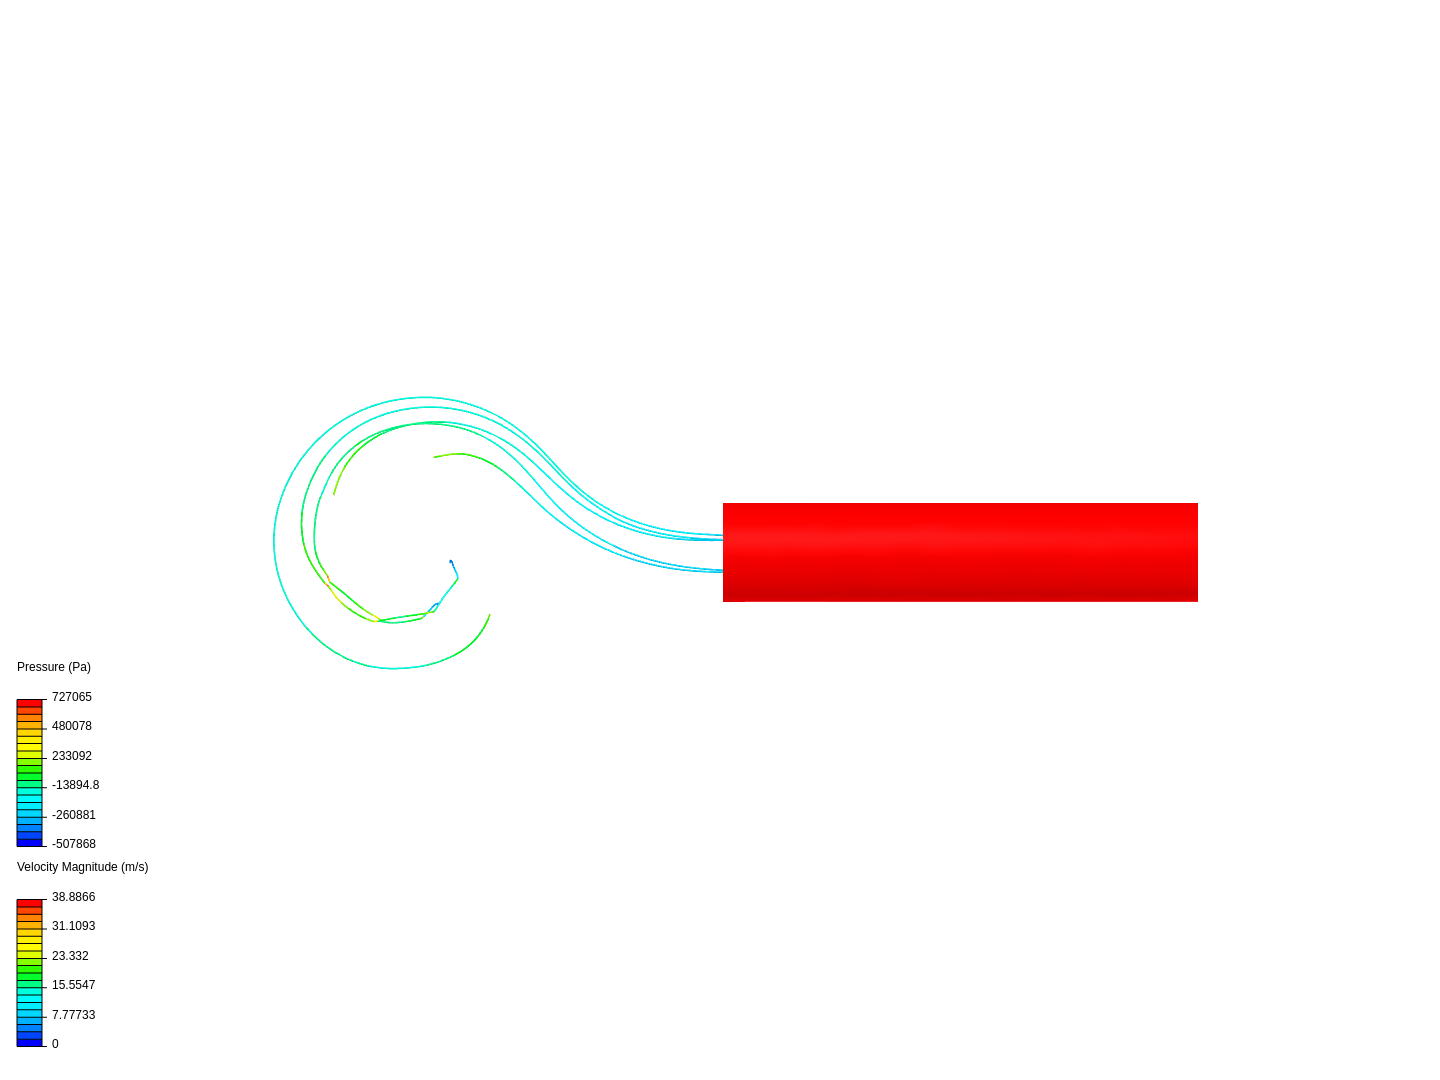 CentrifugalPump(ico,coarse) image